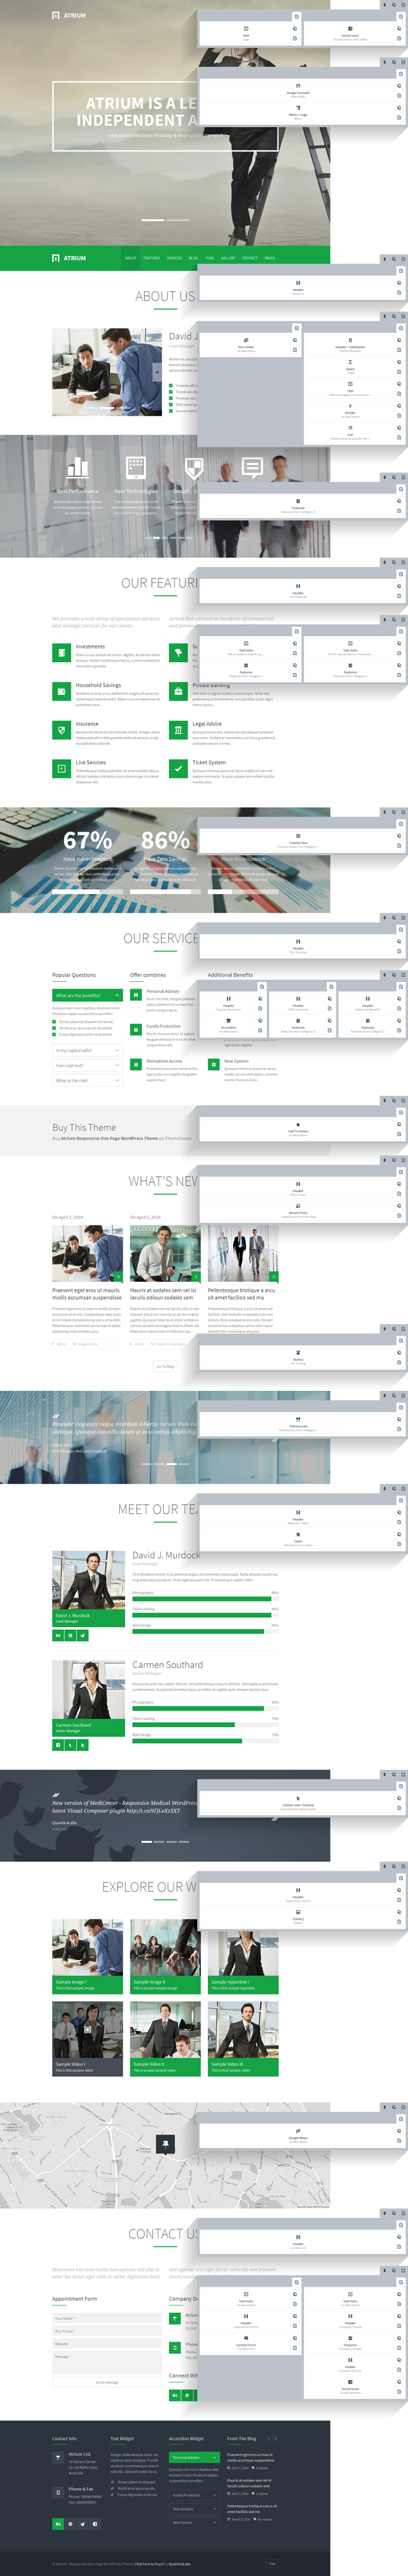 Atrium - Finance Consulting Advisor WordPress Theme - 5